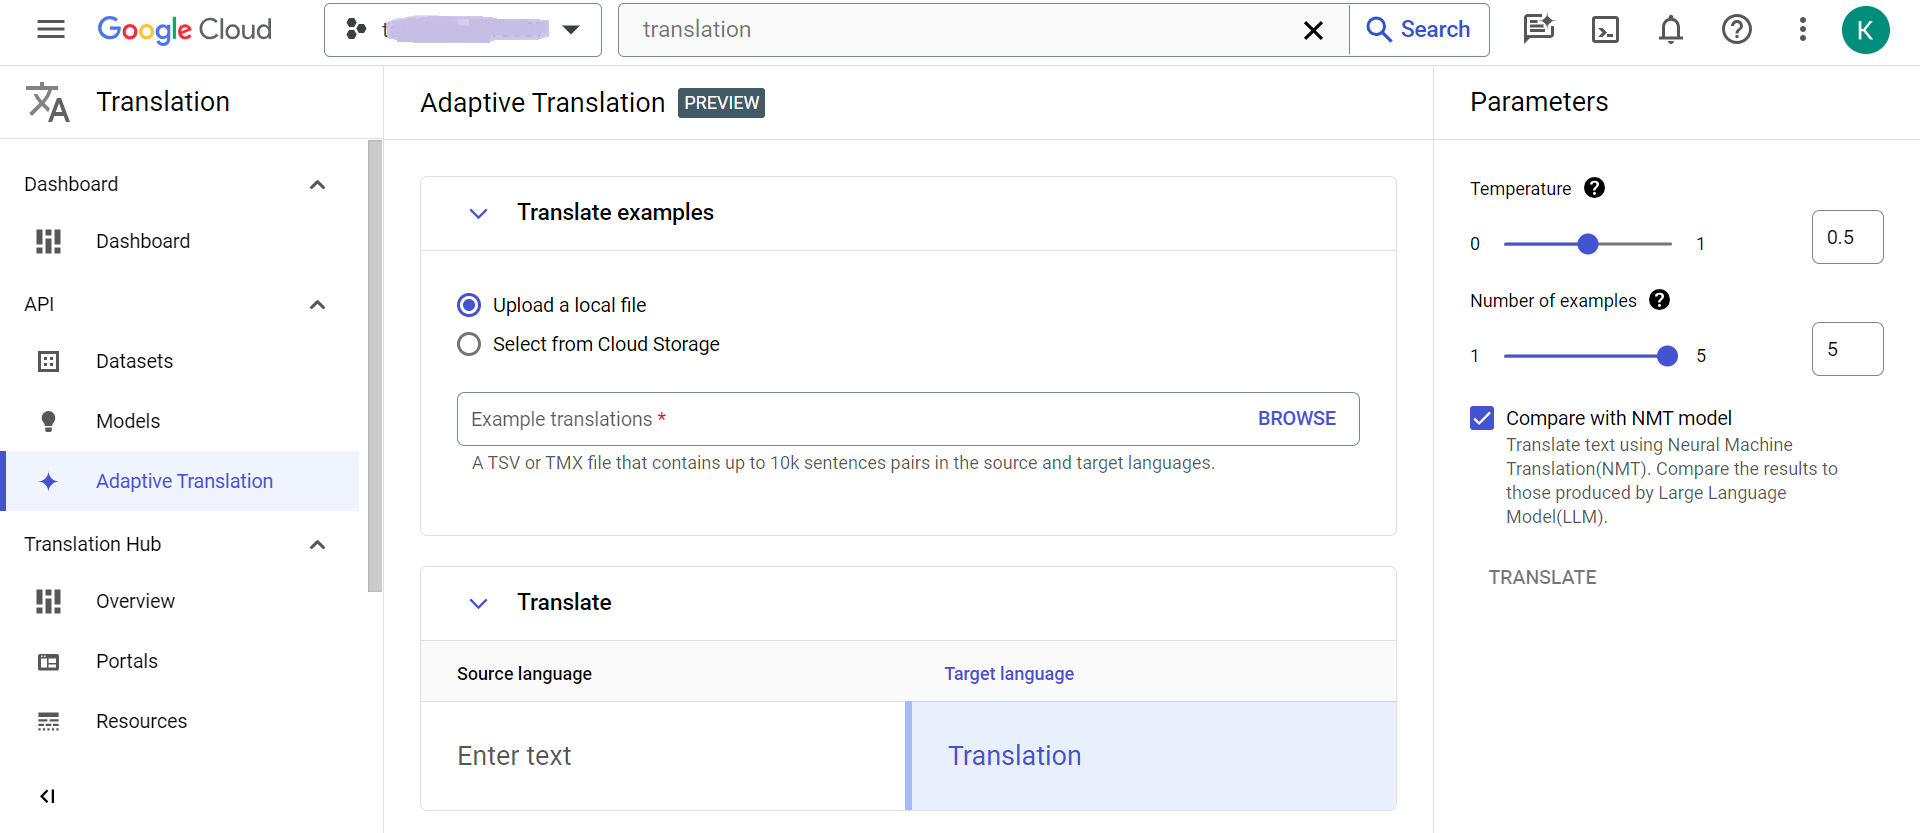 Screenshot showing Google Adaptive Translation interface inside Google Cloud